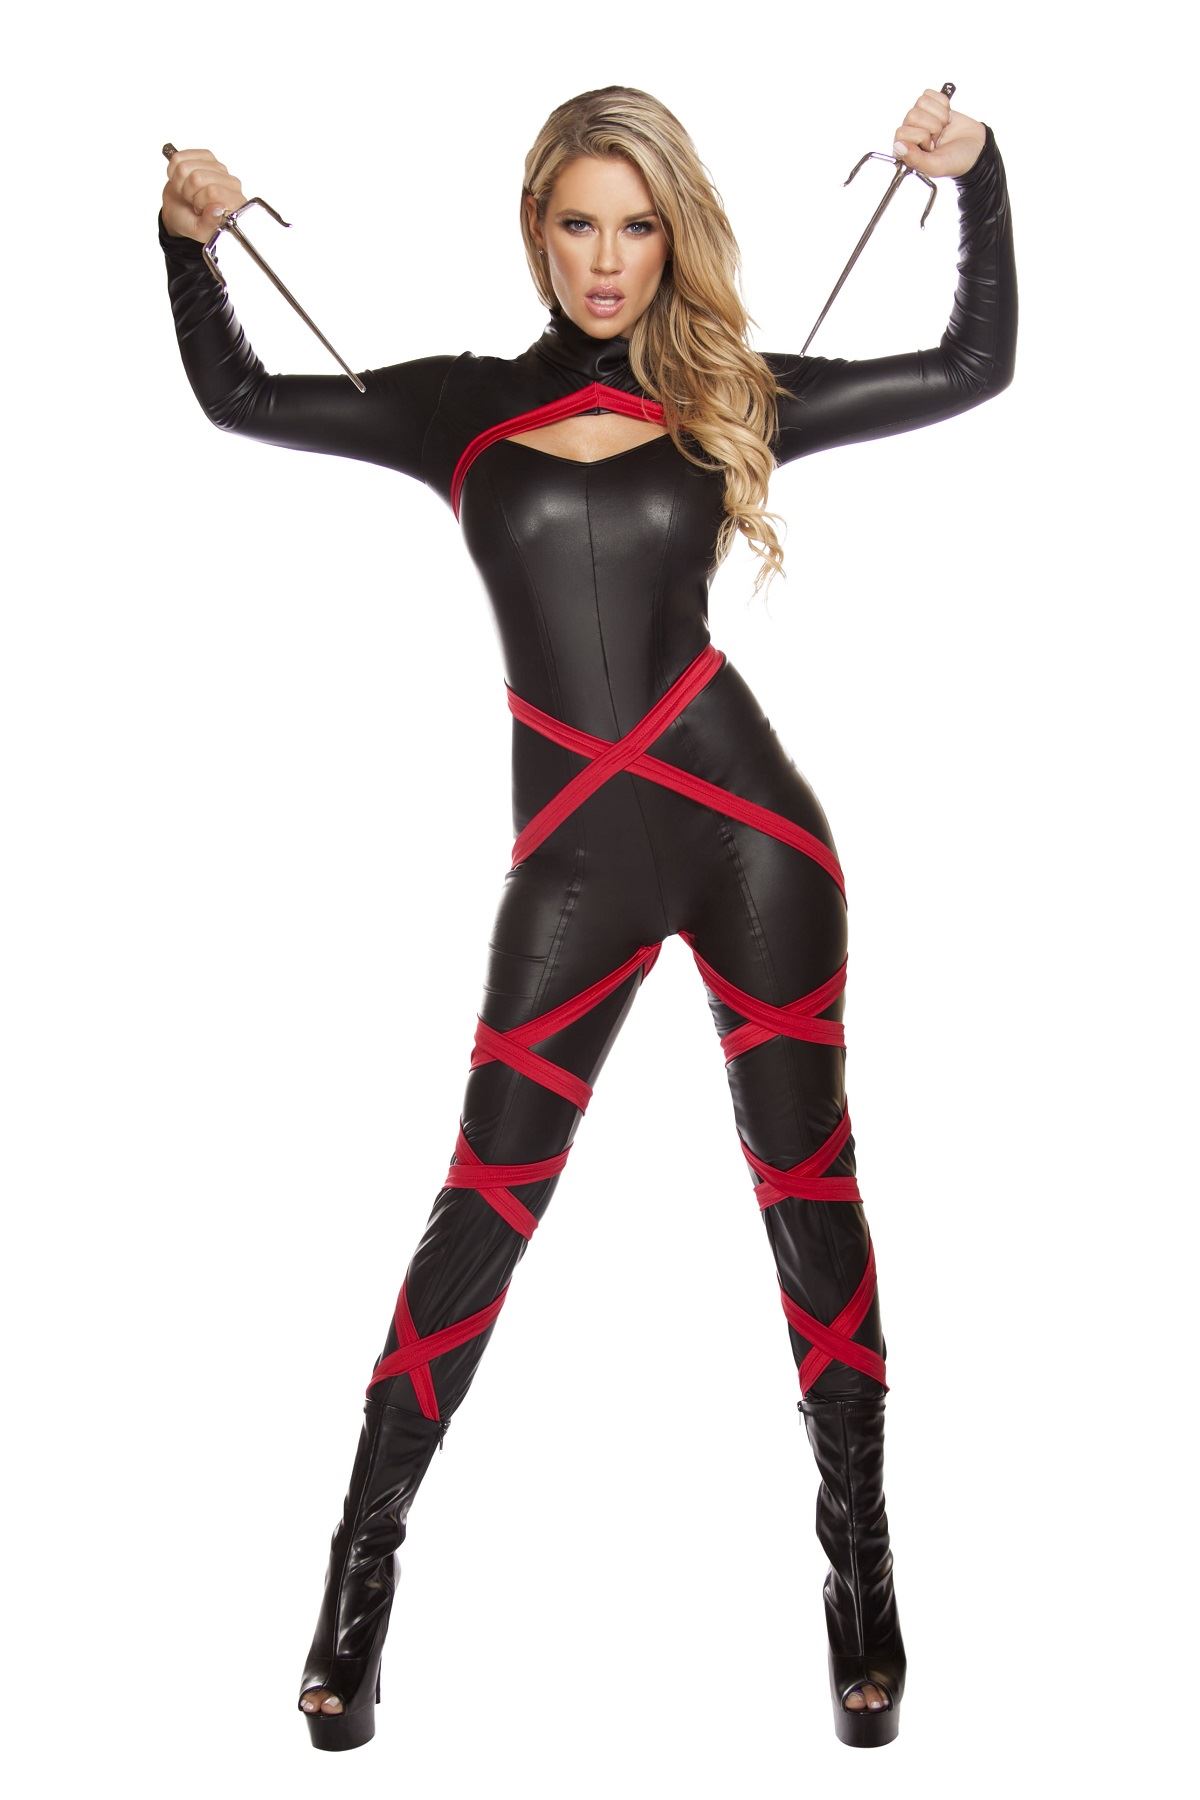 Adult Naughty Ninja Catsuit Woman Costume 70 99 The